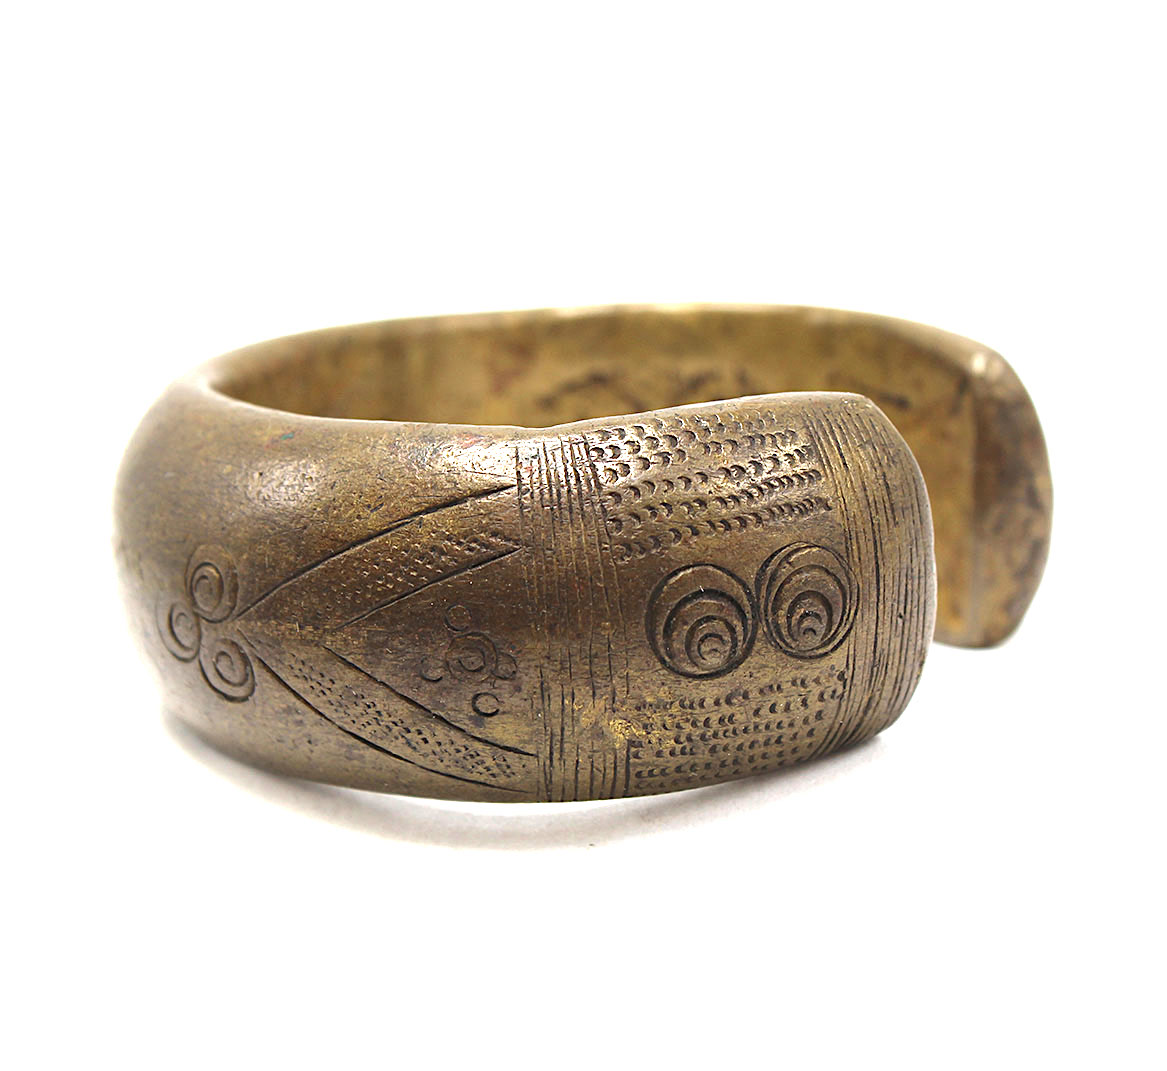 Antique West African OMANI tribe slave currency bracelet art object jewelry  | eBay